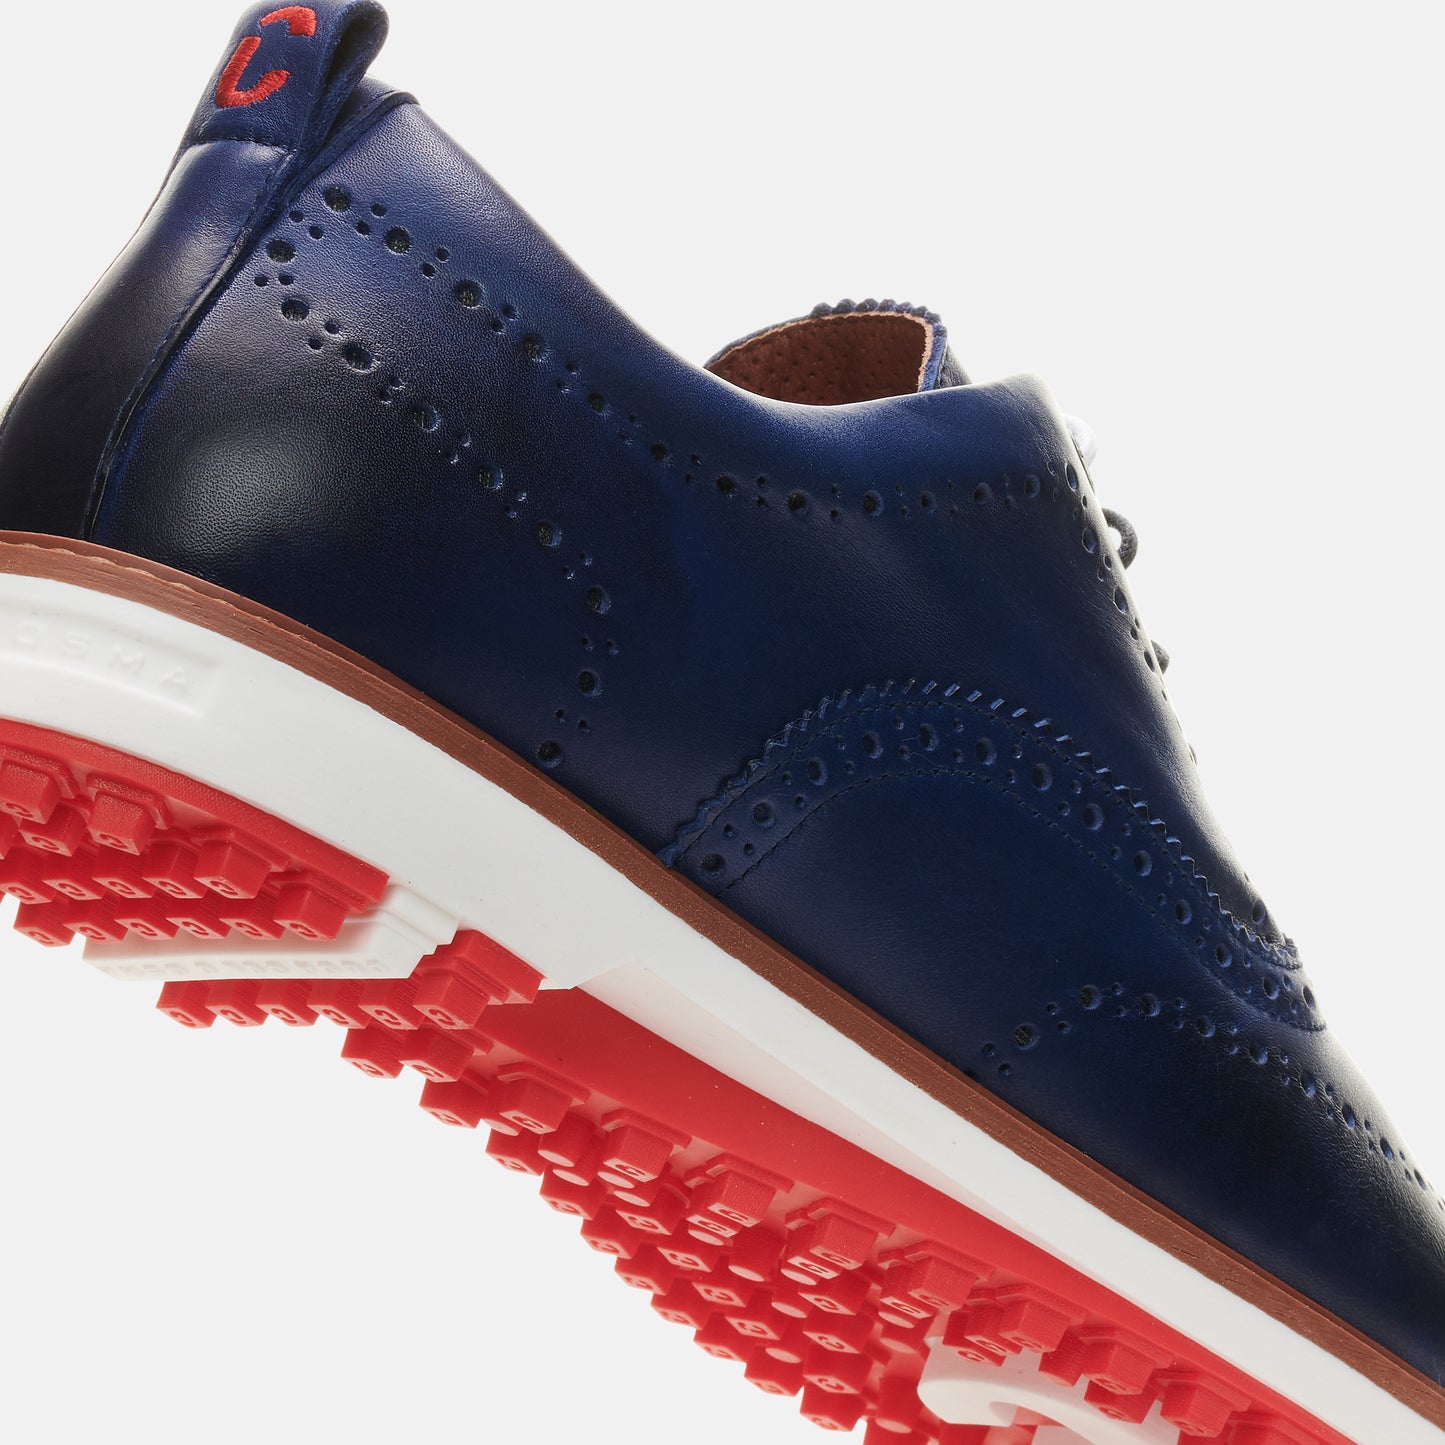 Churchill blue classic men's golf shoe from duca del cosma